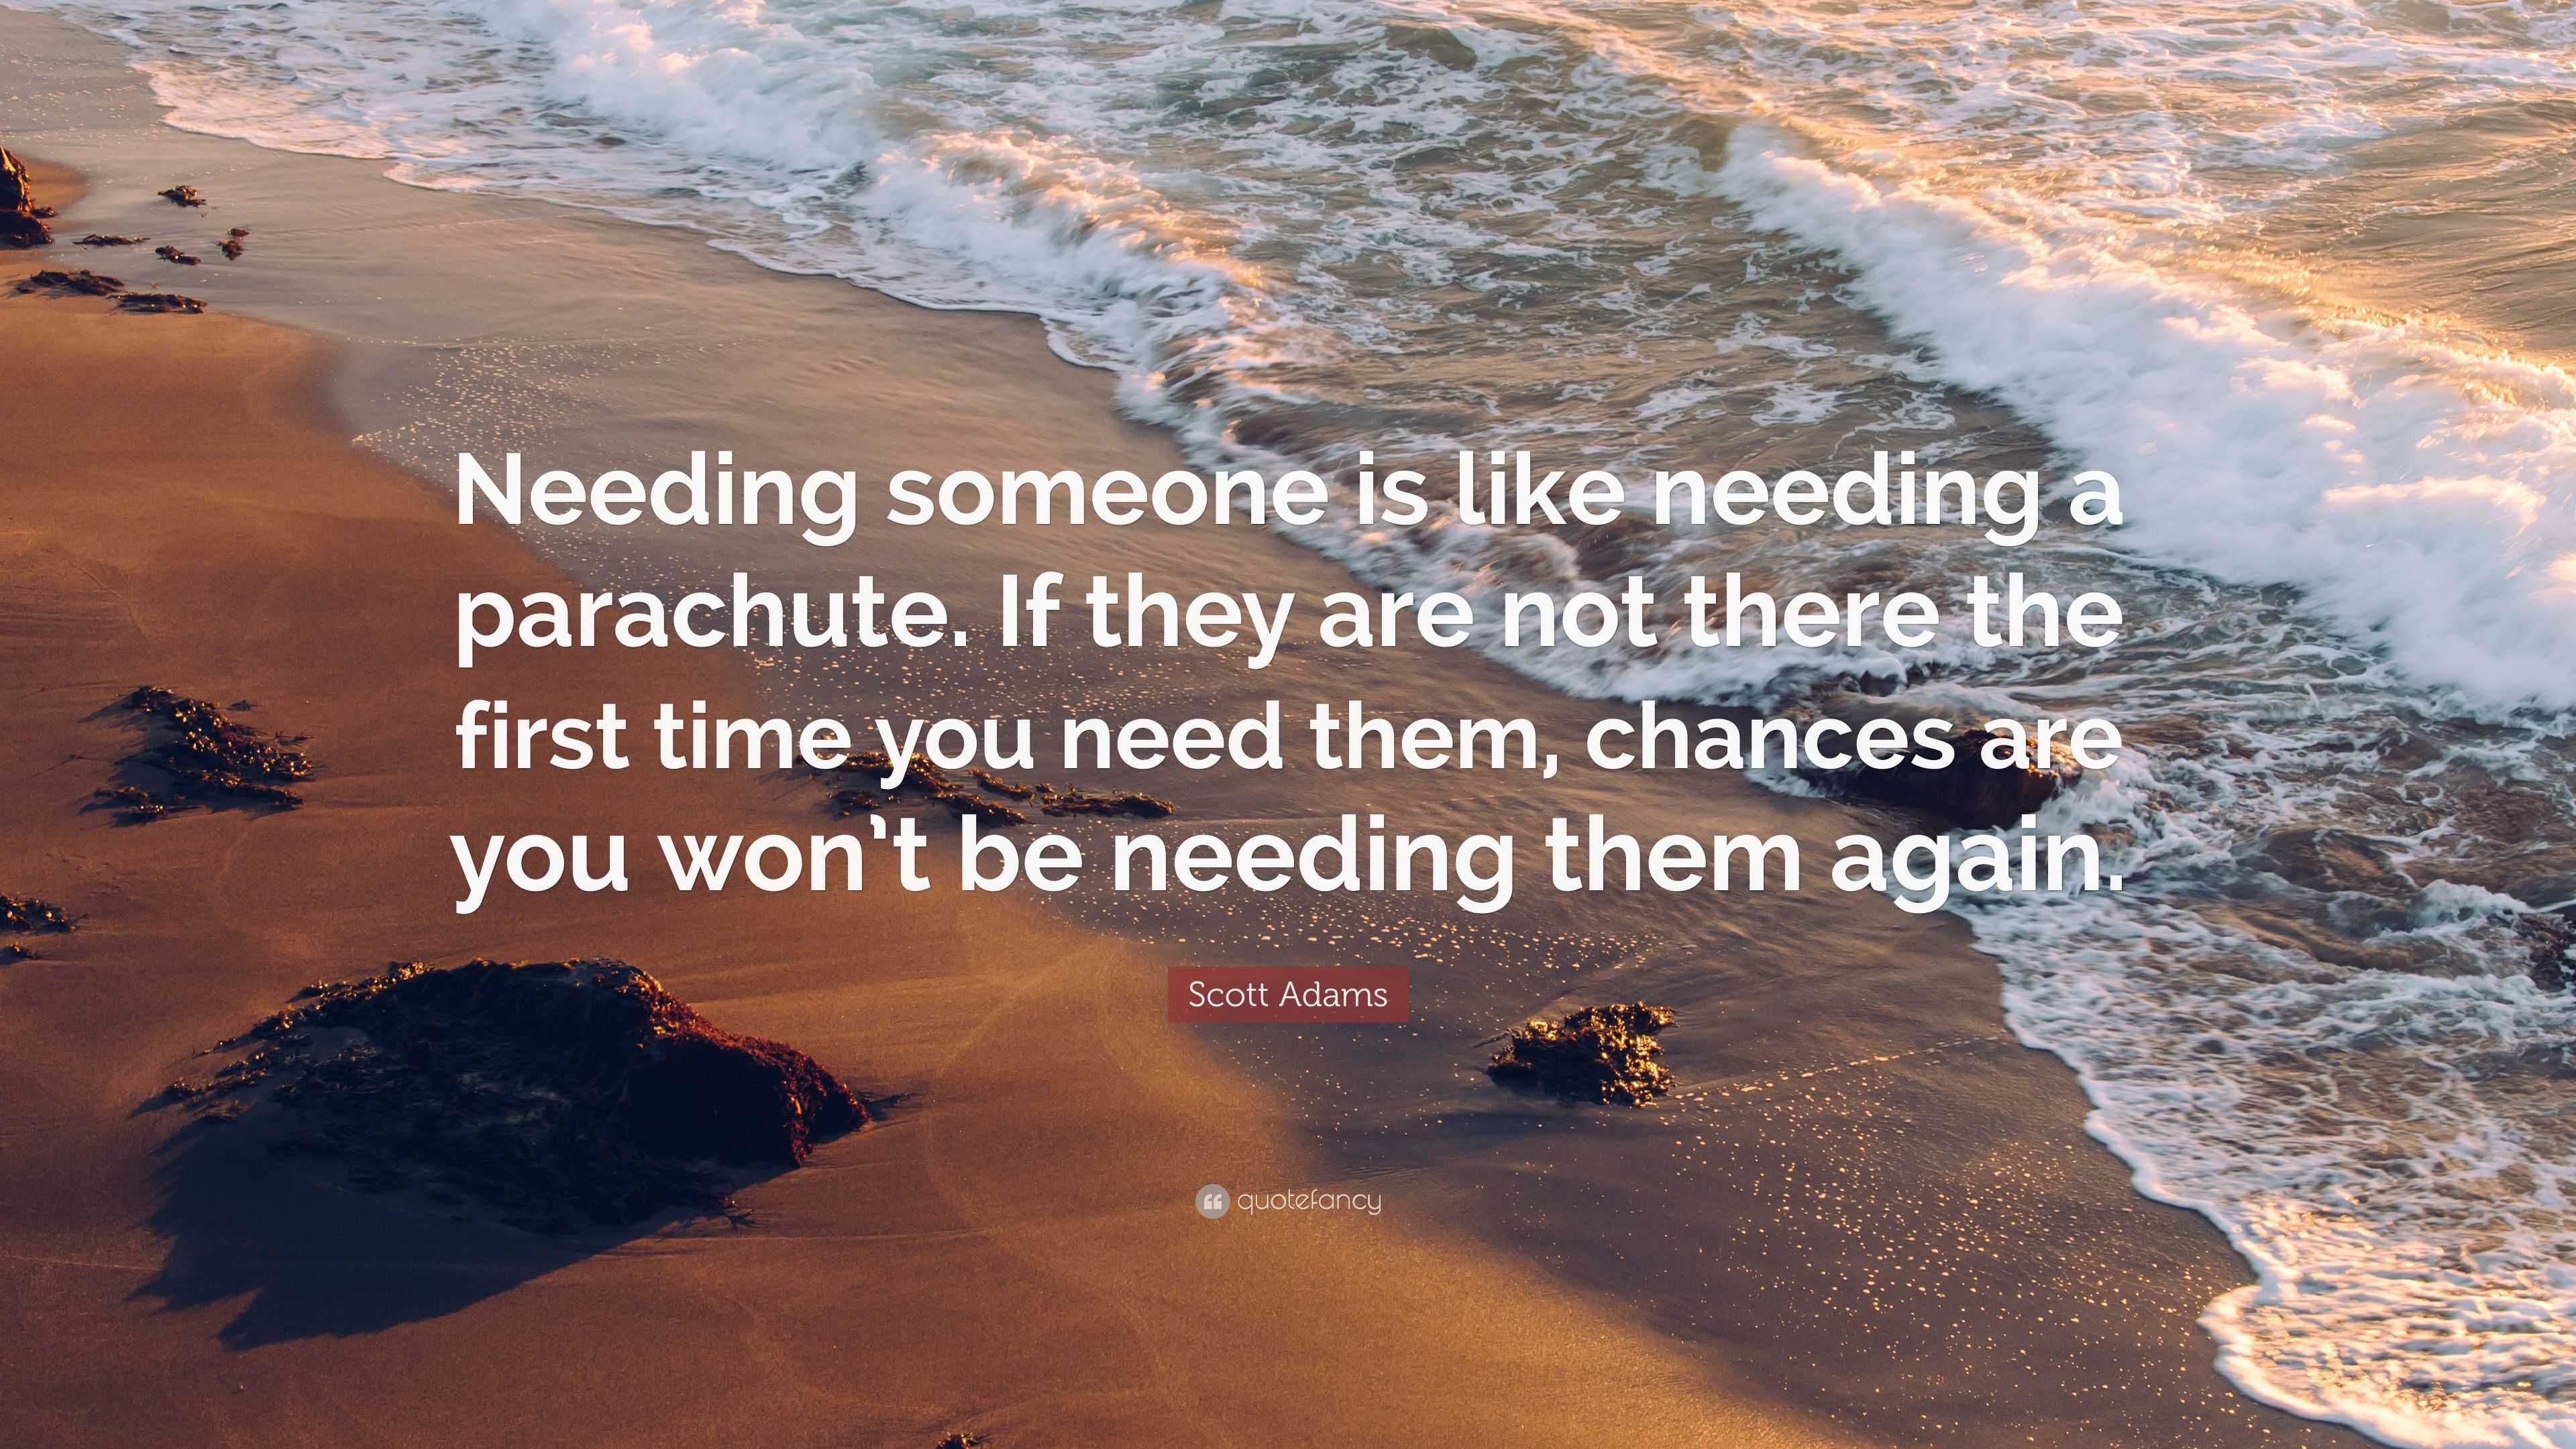 Scott Adams Quote: “Needing someone is like needing a parachute. If